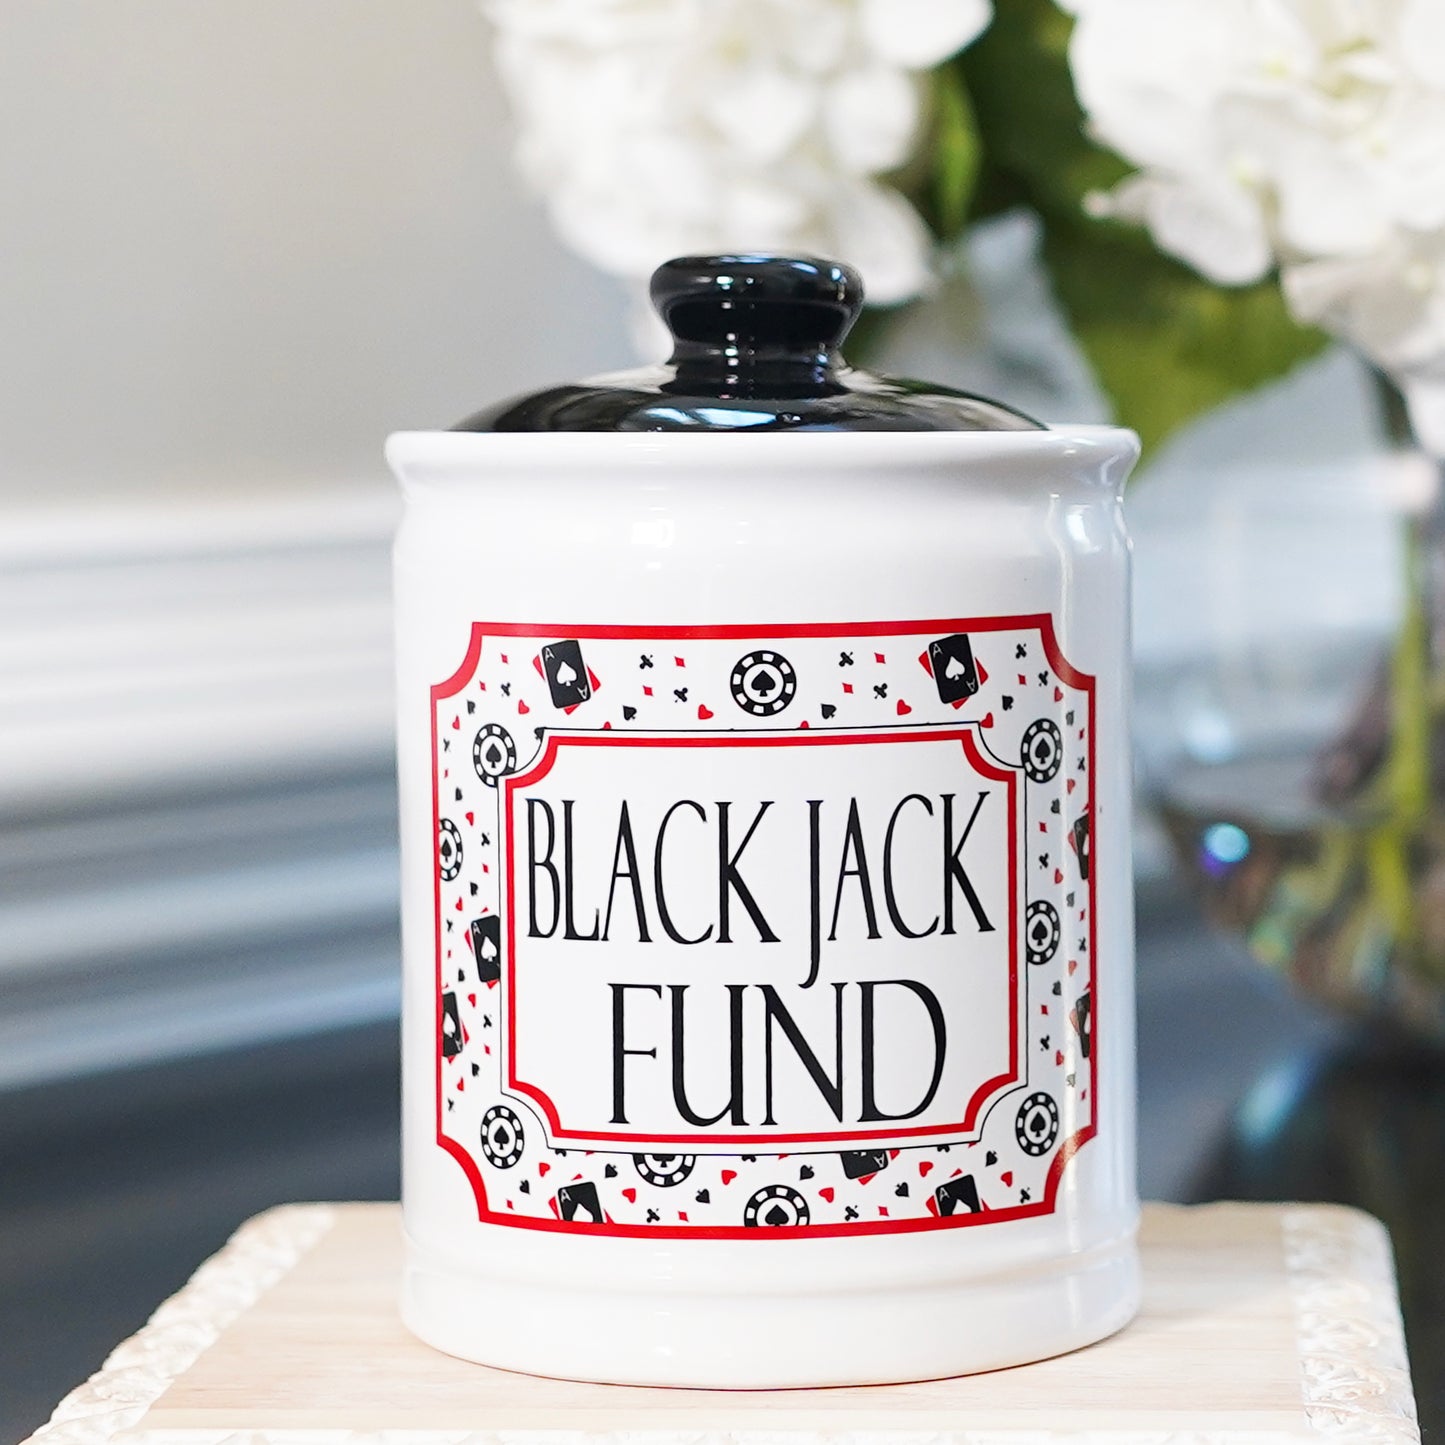 Cottage Creek Blackjack Fund Piggy Bank , Multicolored, Ceramic, 6" Casino Candy Jar, Gambling Gifts